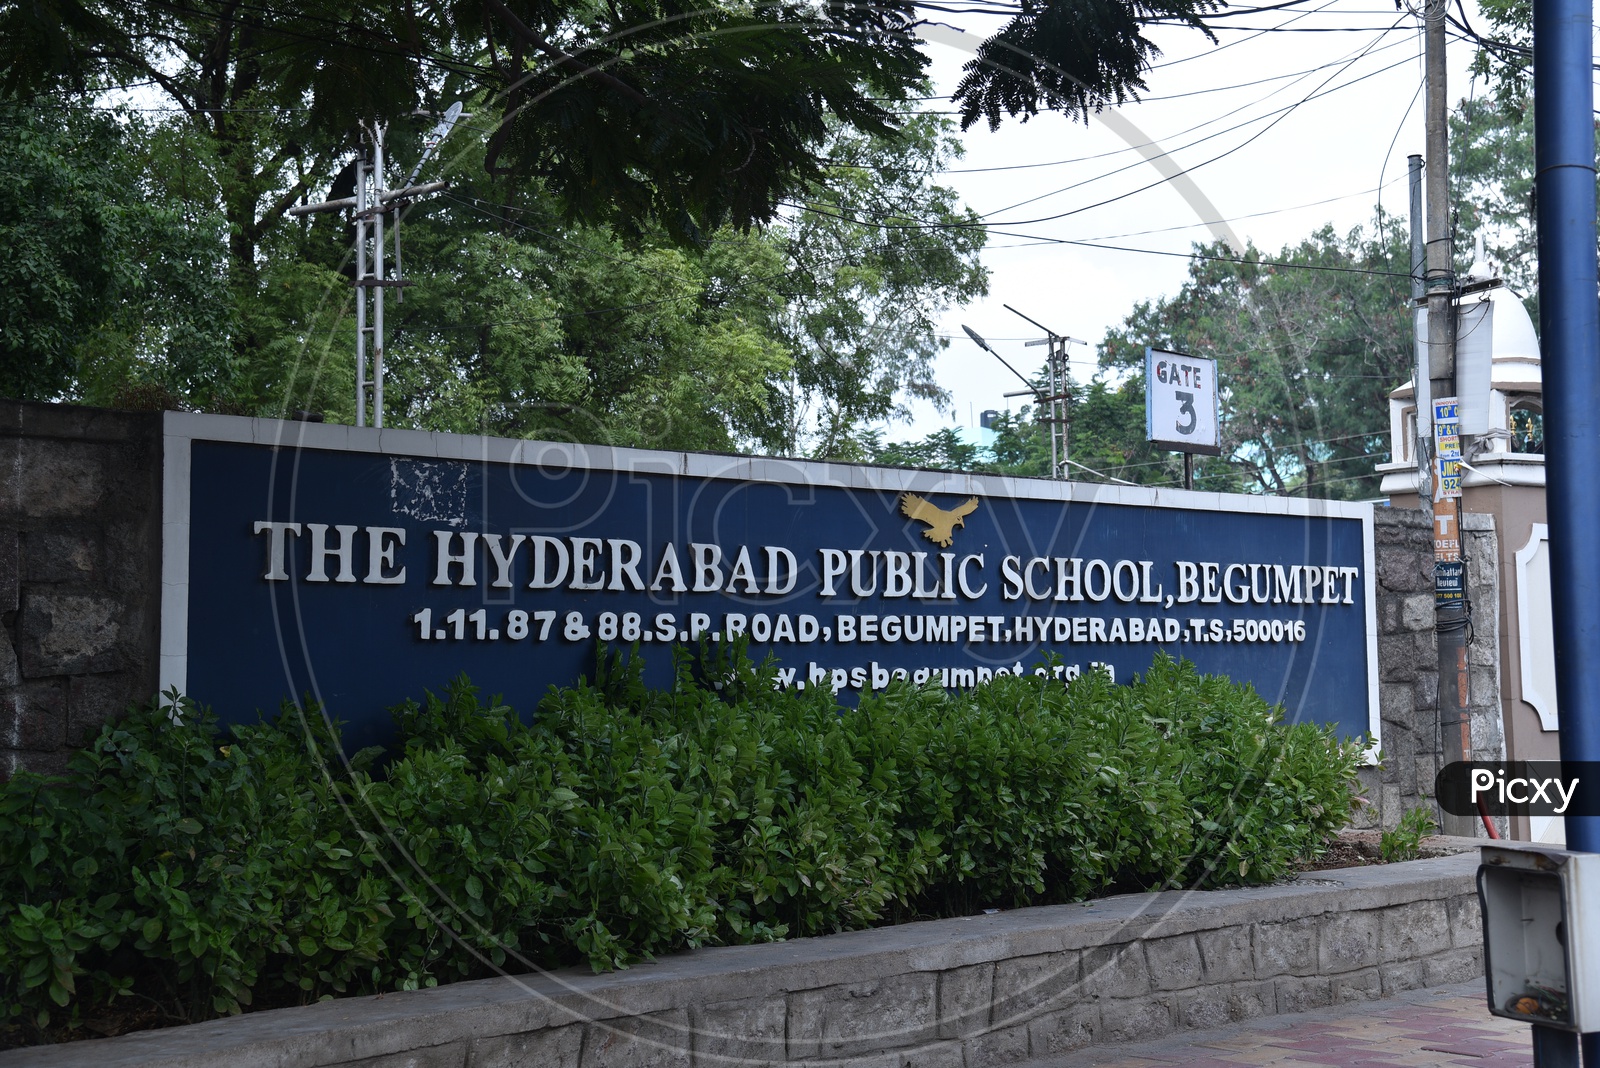 The Hyderabad Public School in Begumpet